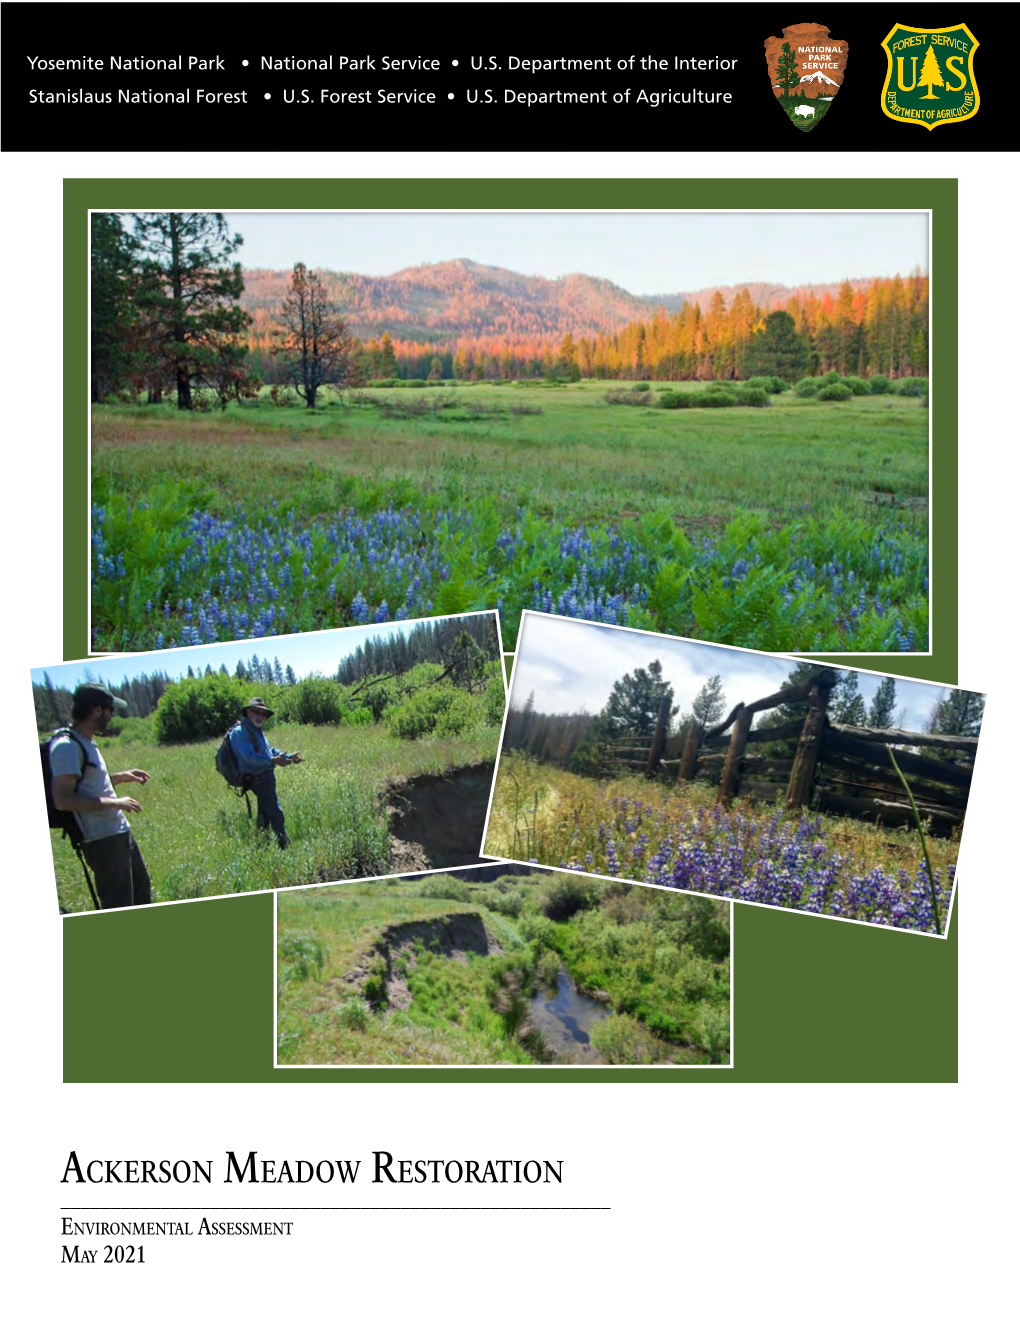 Ackerson Meadow Restoration Environmenal Assessment